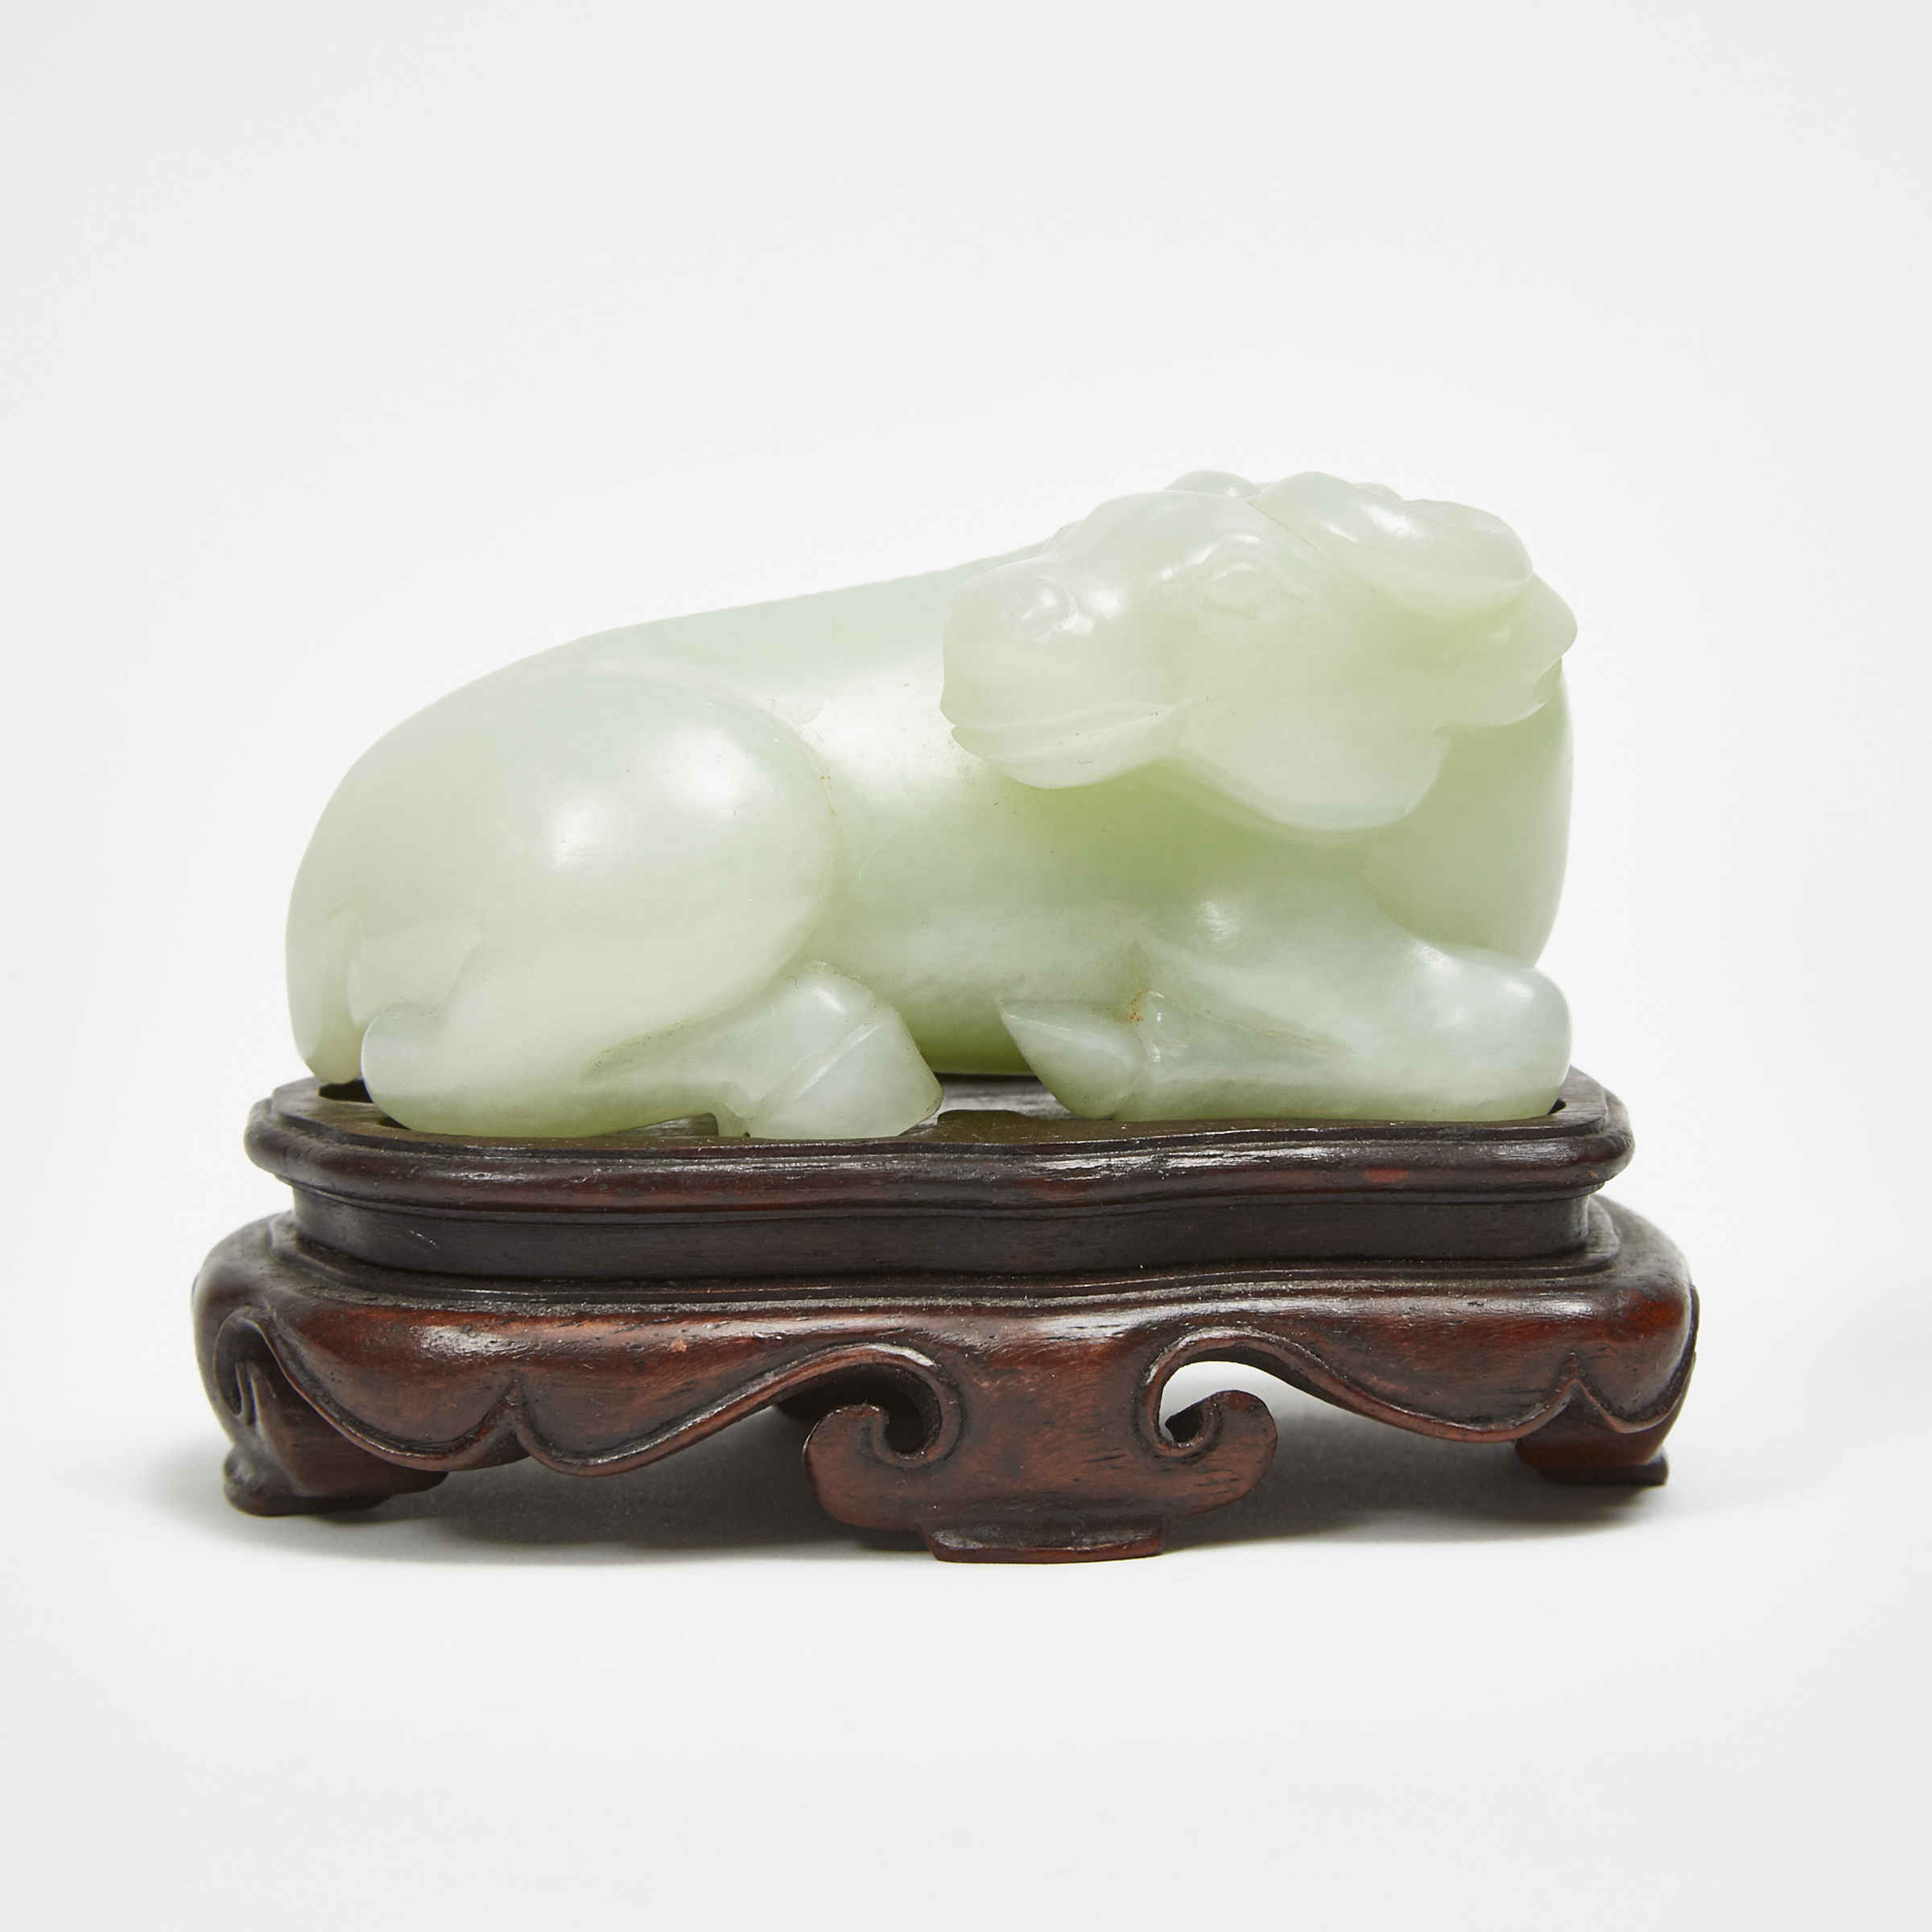 A Celadon White Jade Carving of a Recumbent Buffalo